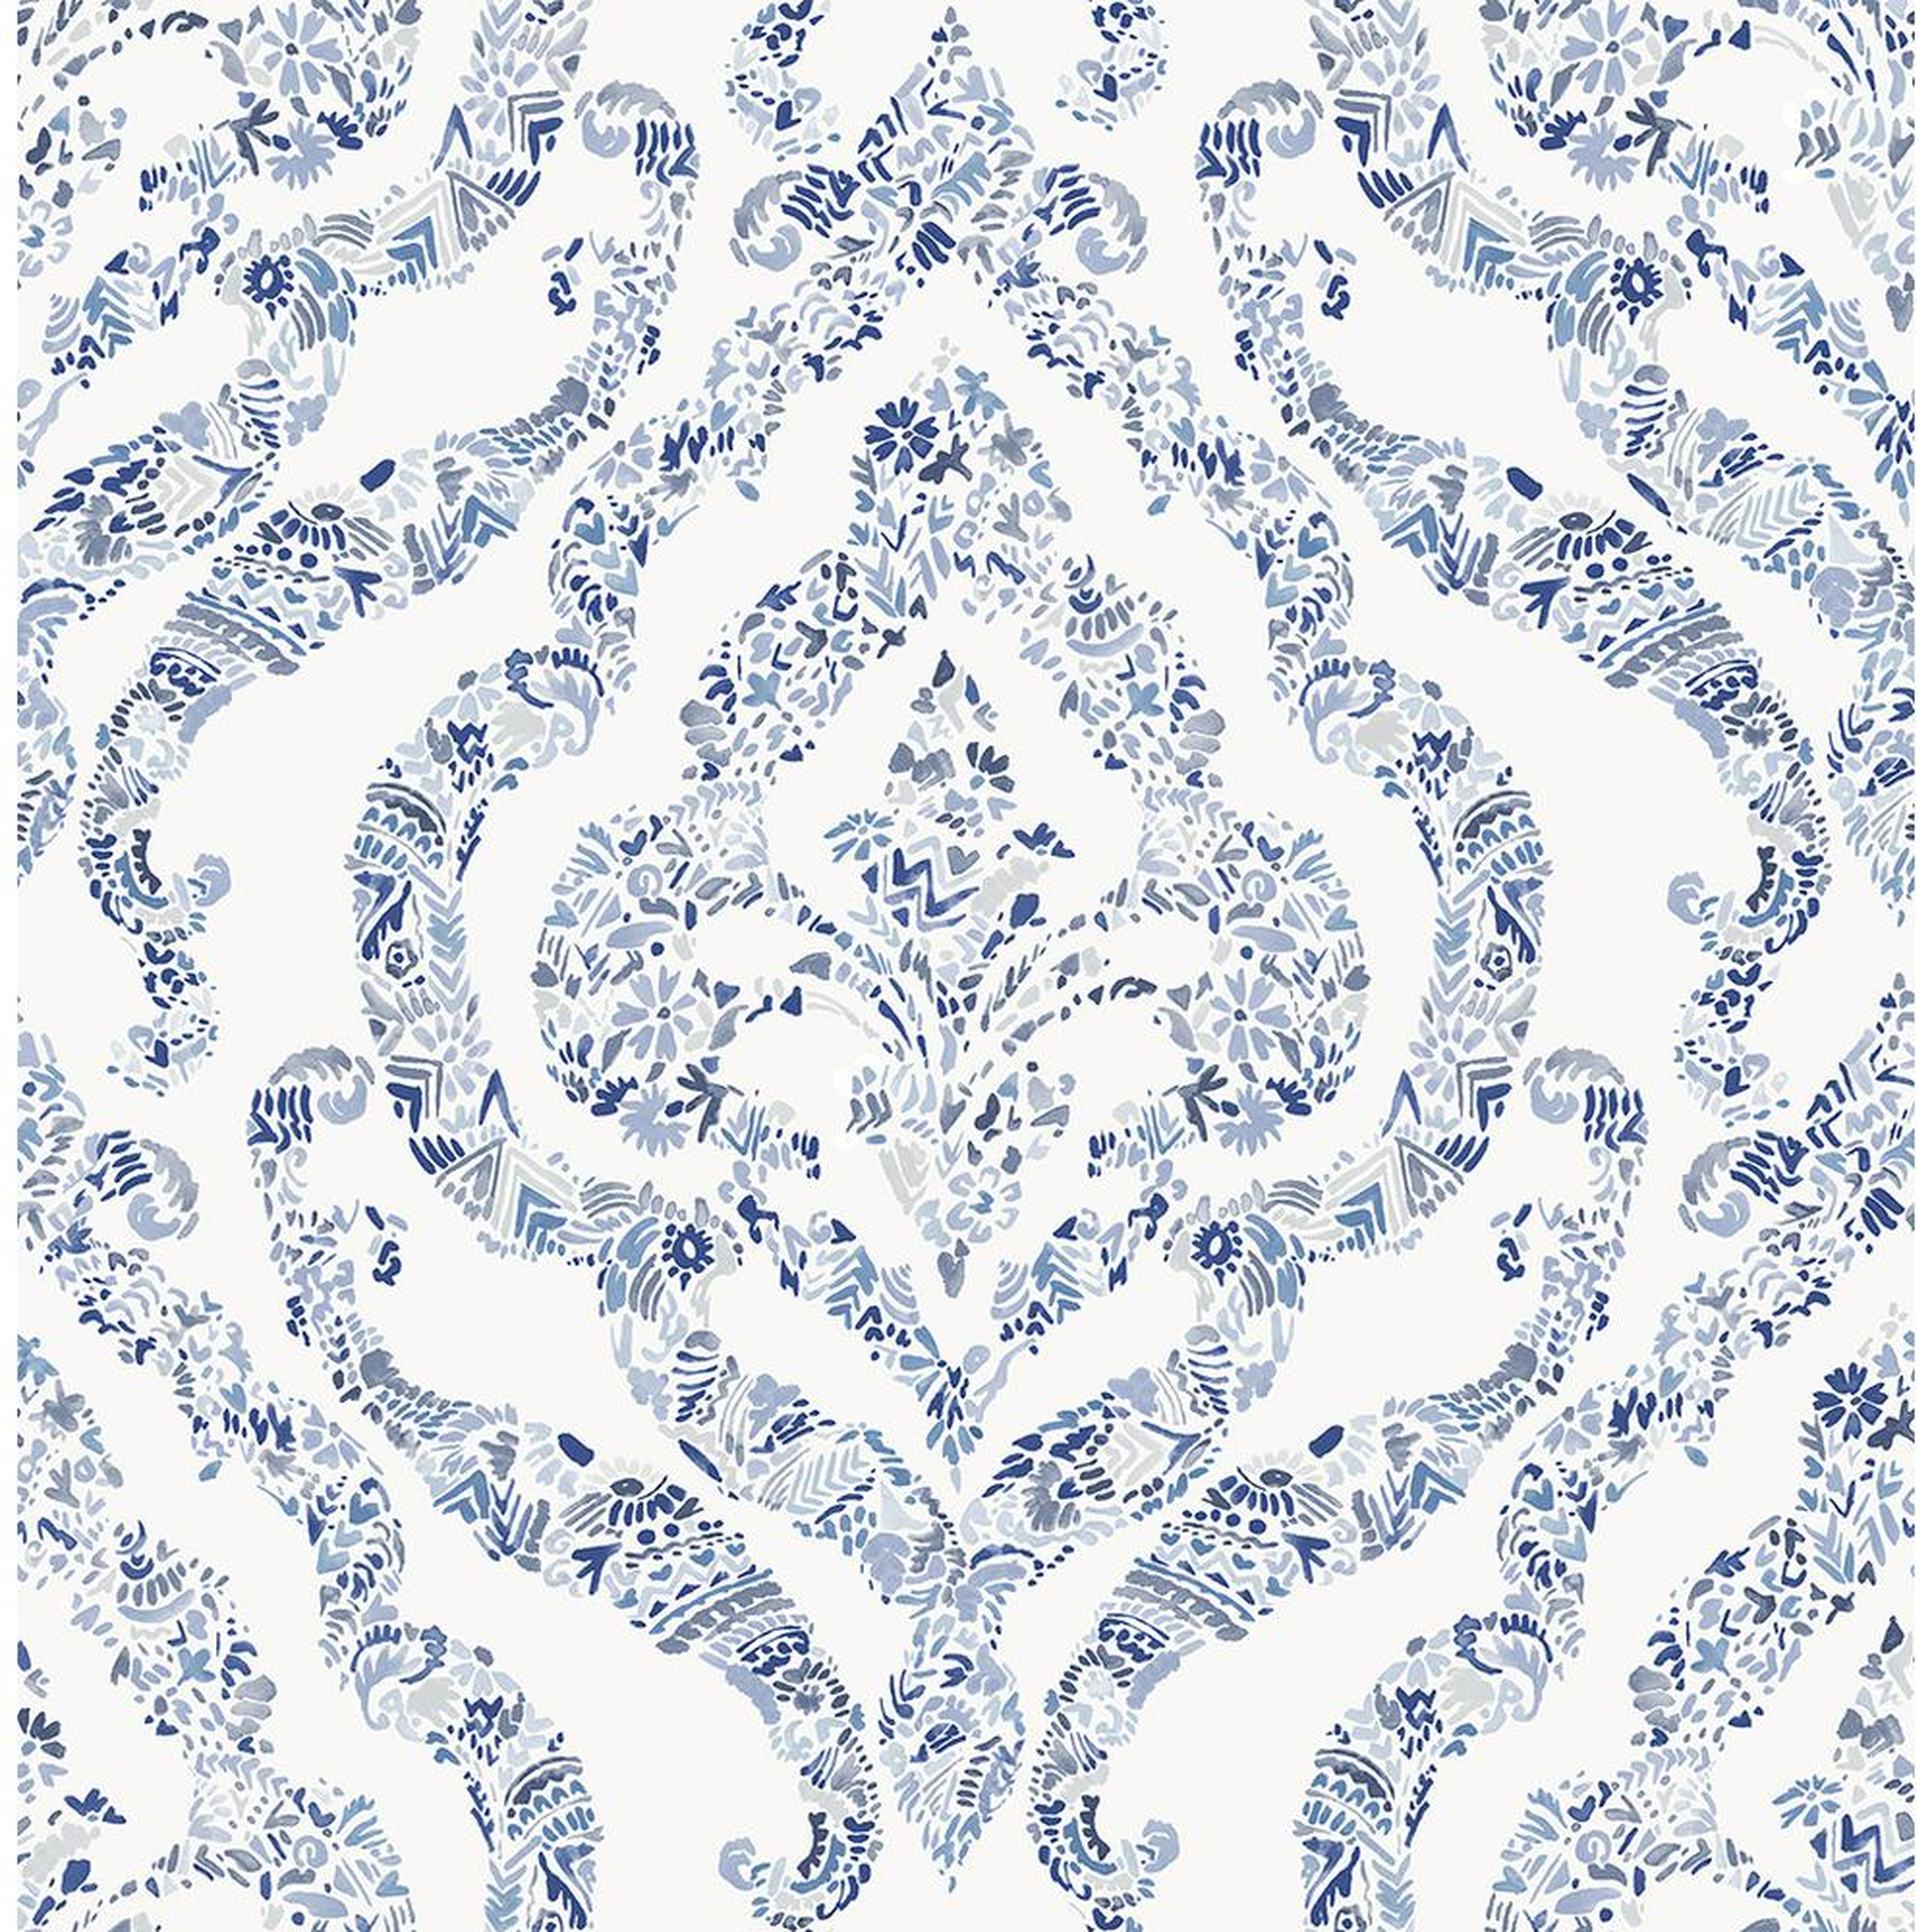 A-Street 56.4 sq. ft. Featherton Blue Floral Damask Wallpaper - Home Depot